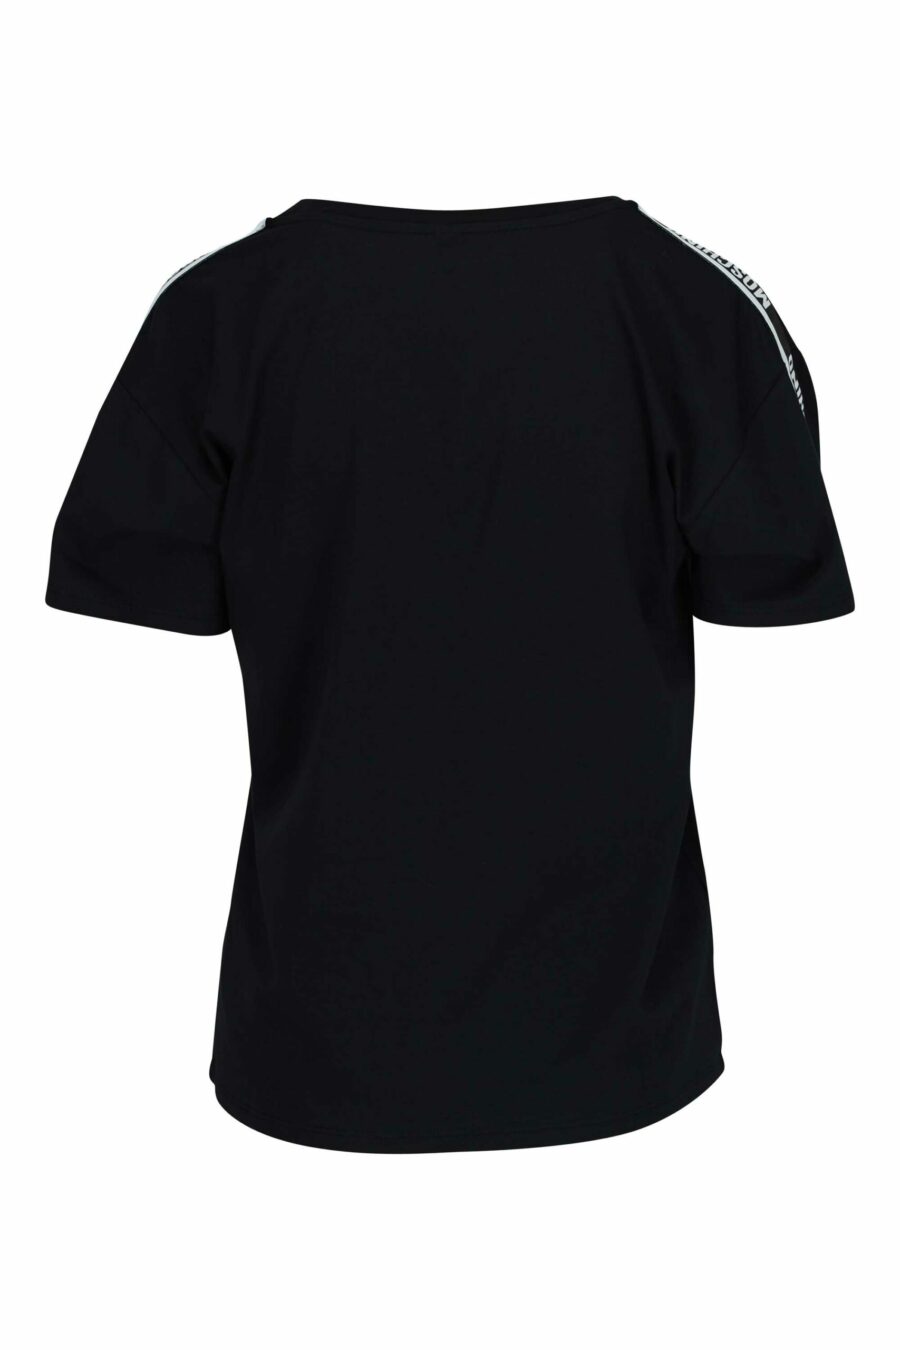 Black T-shirt with white logo on shoulder band - 667113695549 1 scaled